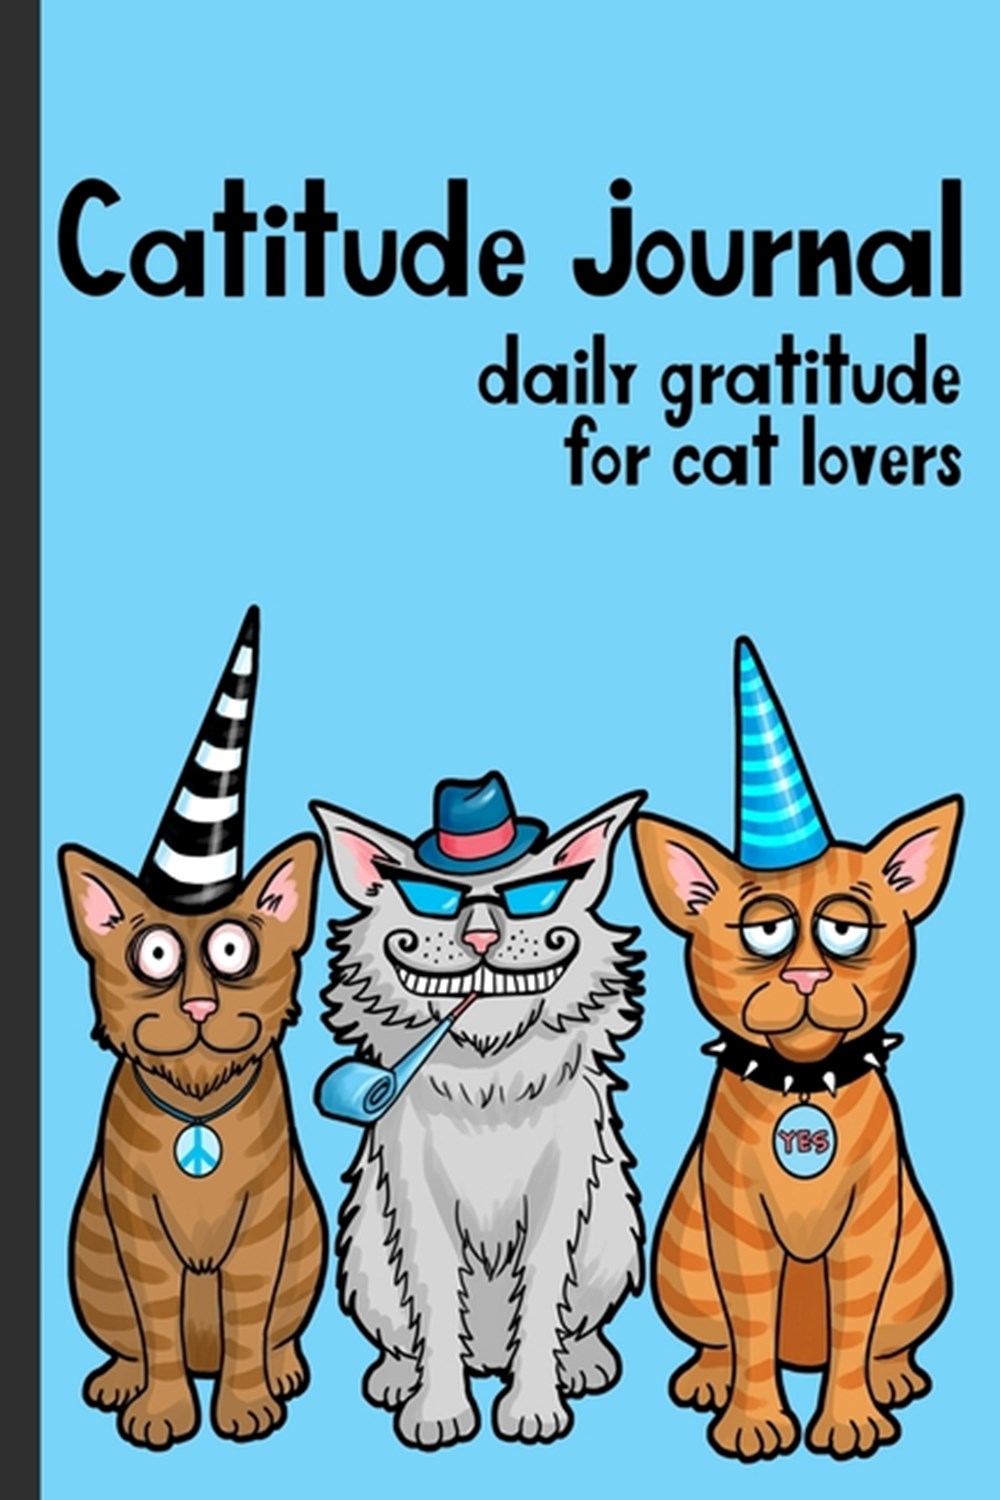 Catitude Journal Daily Gratitude for Cat Lovers